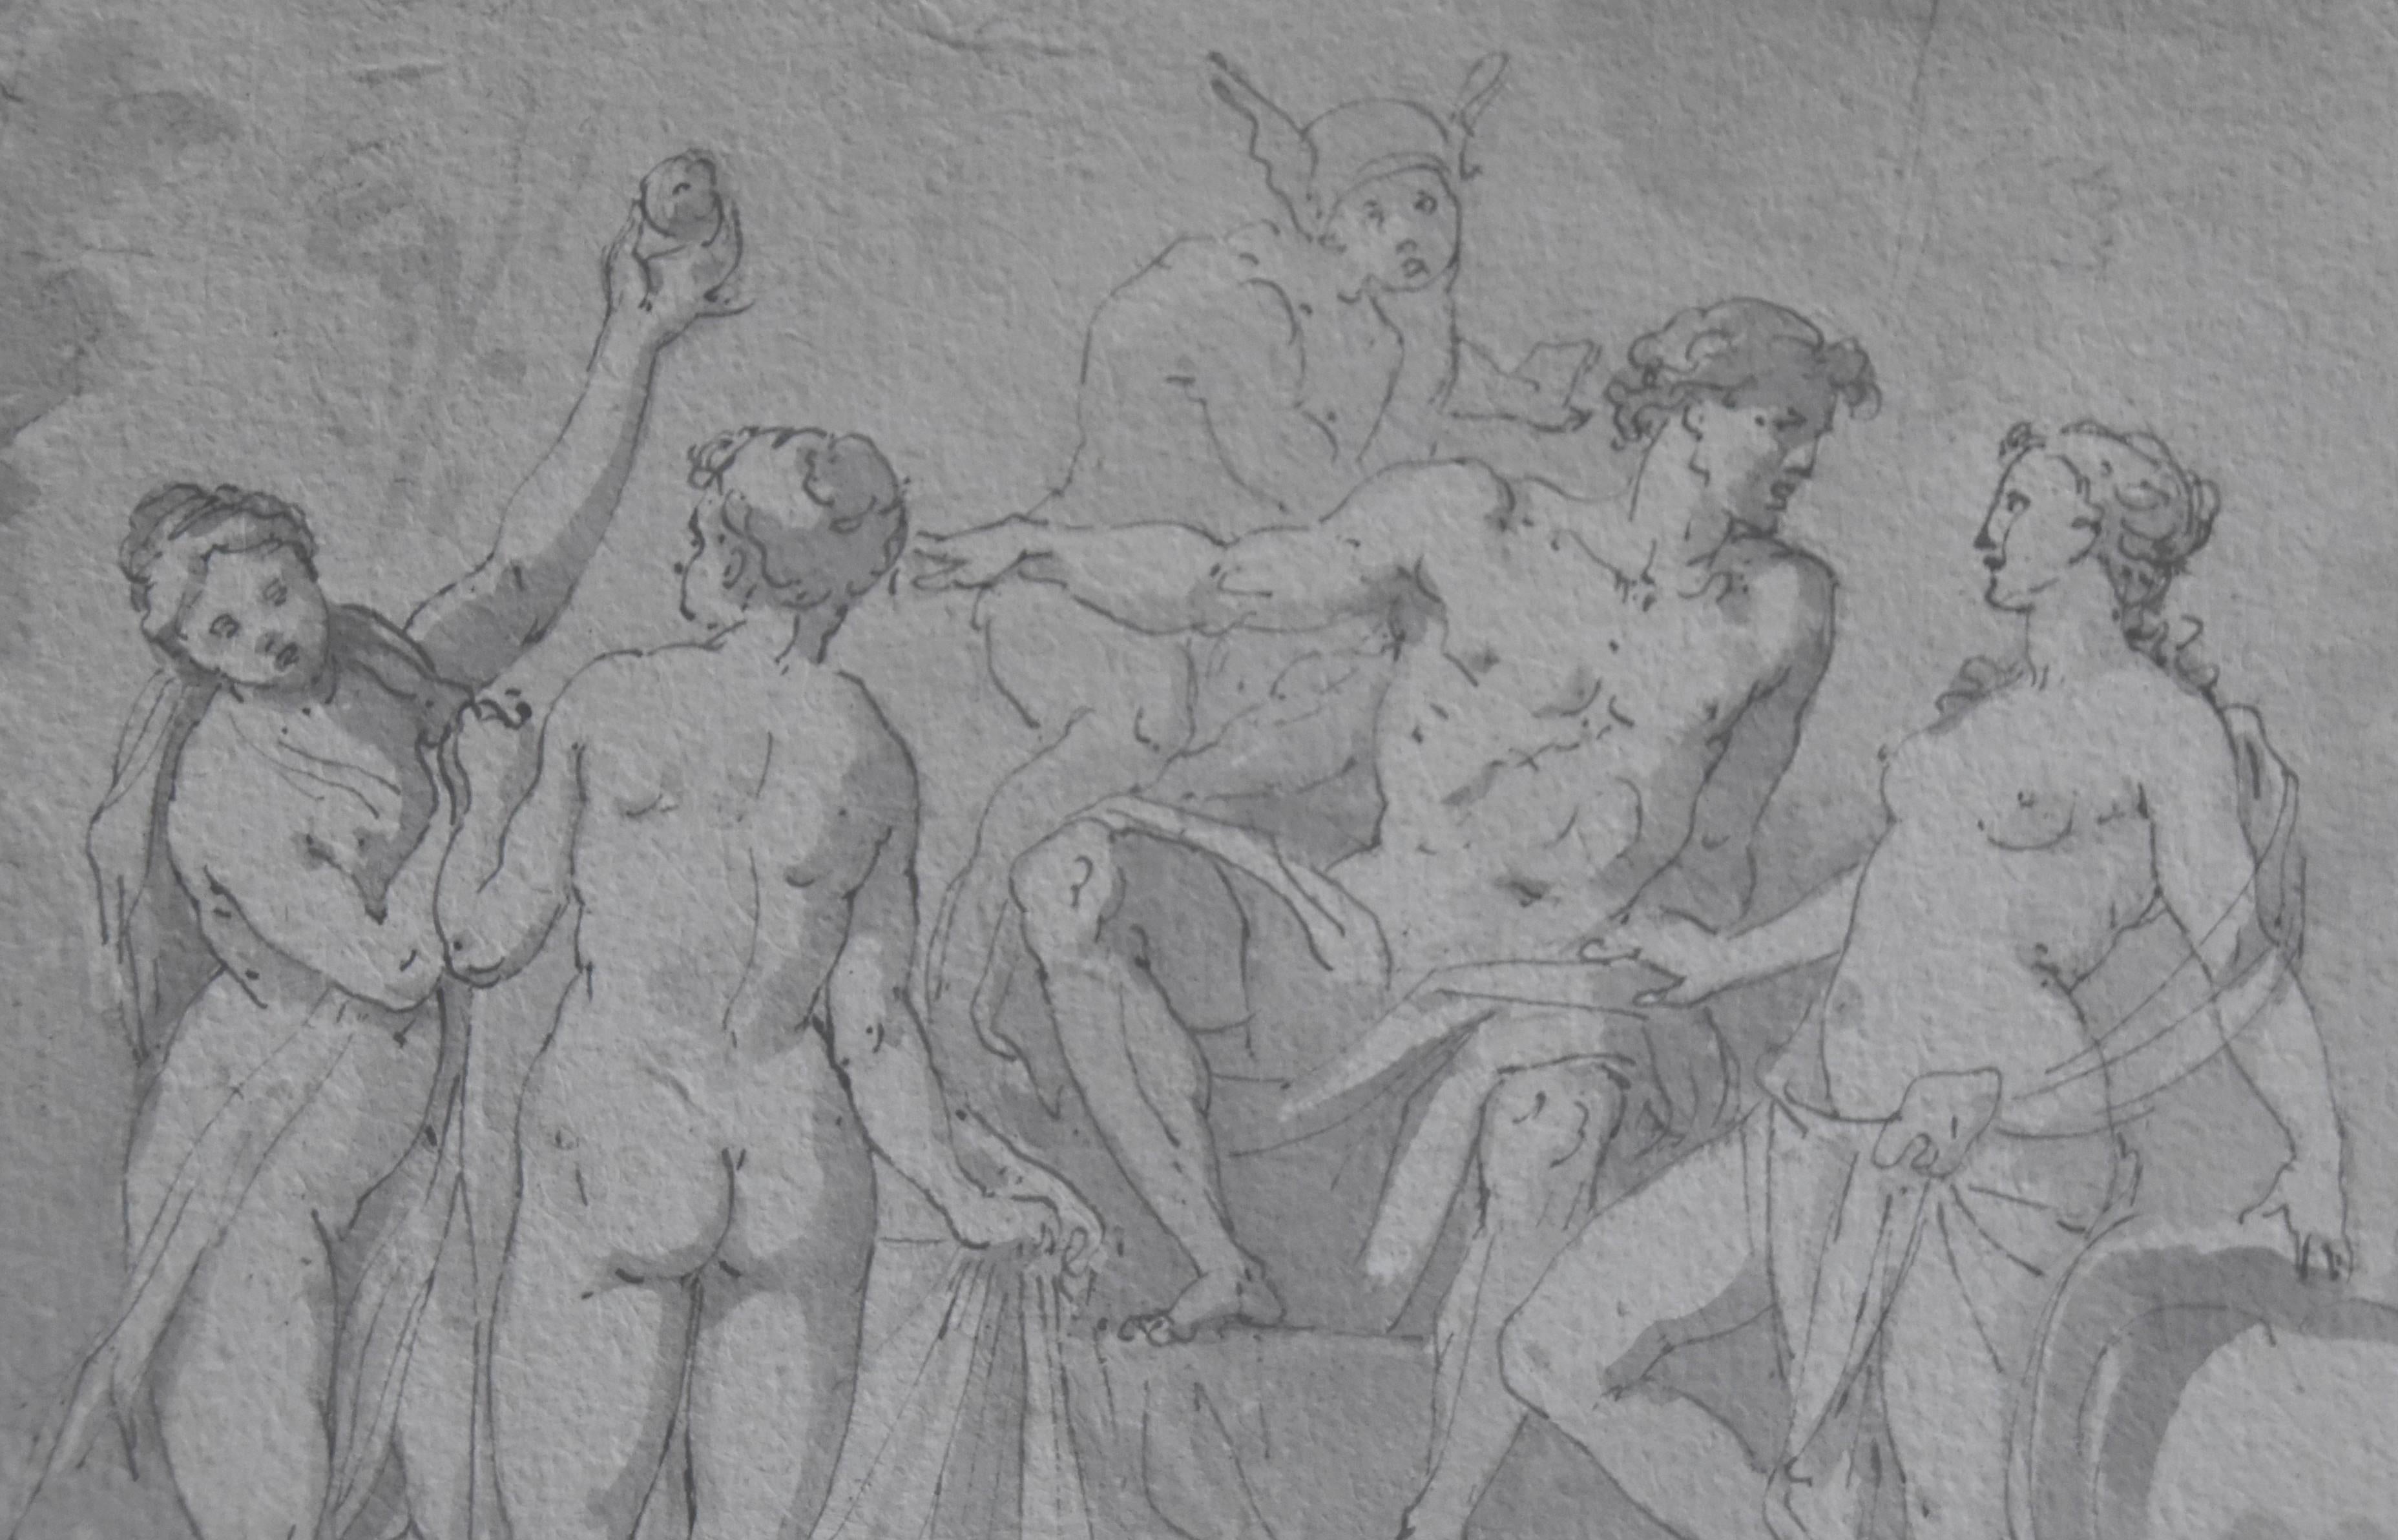 French School 18th century, The Judgement of Paris, original drawing 1